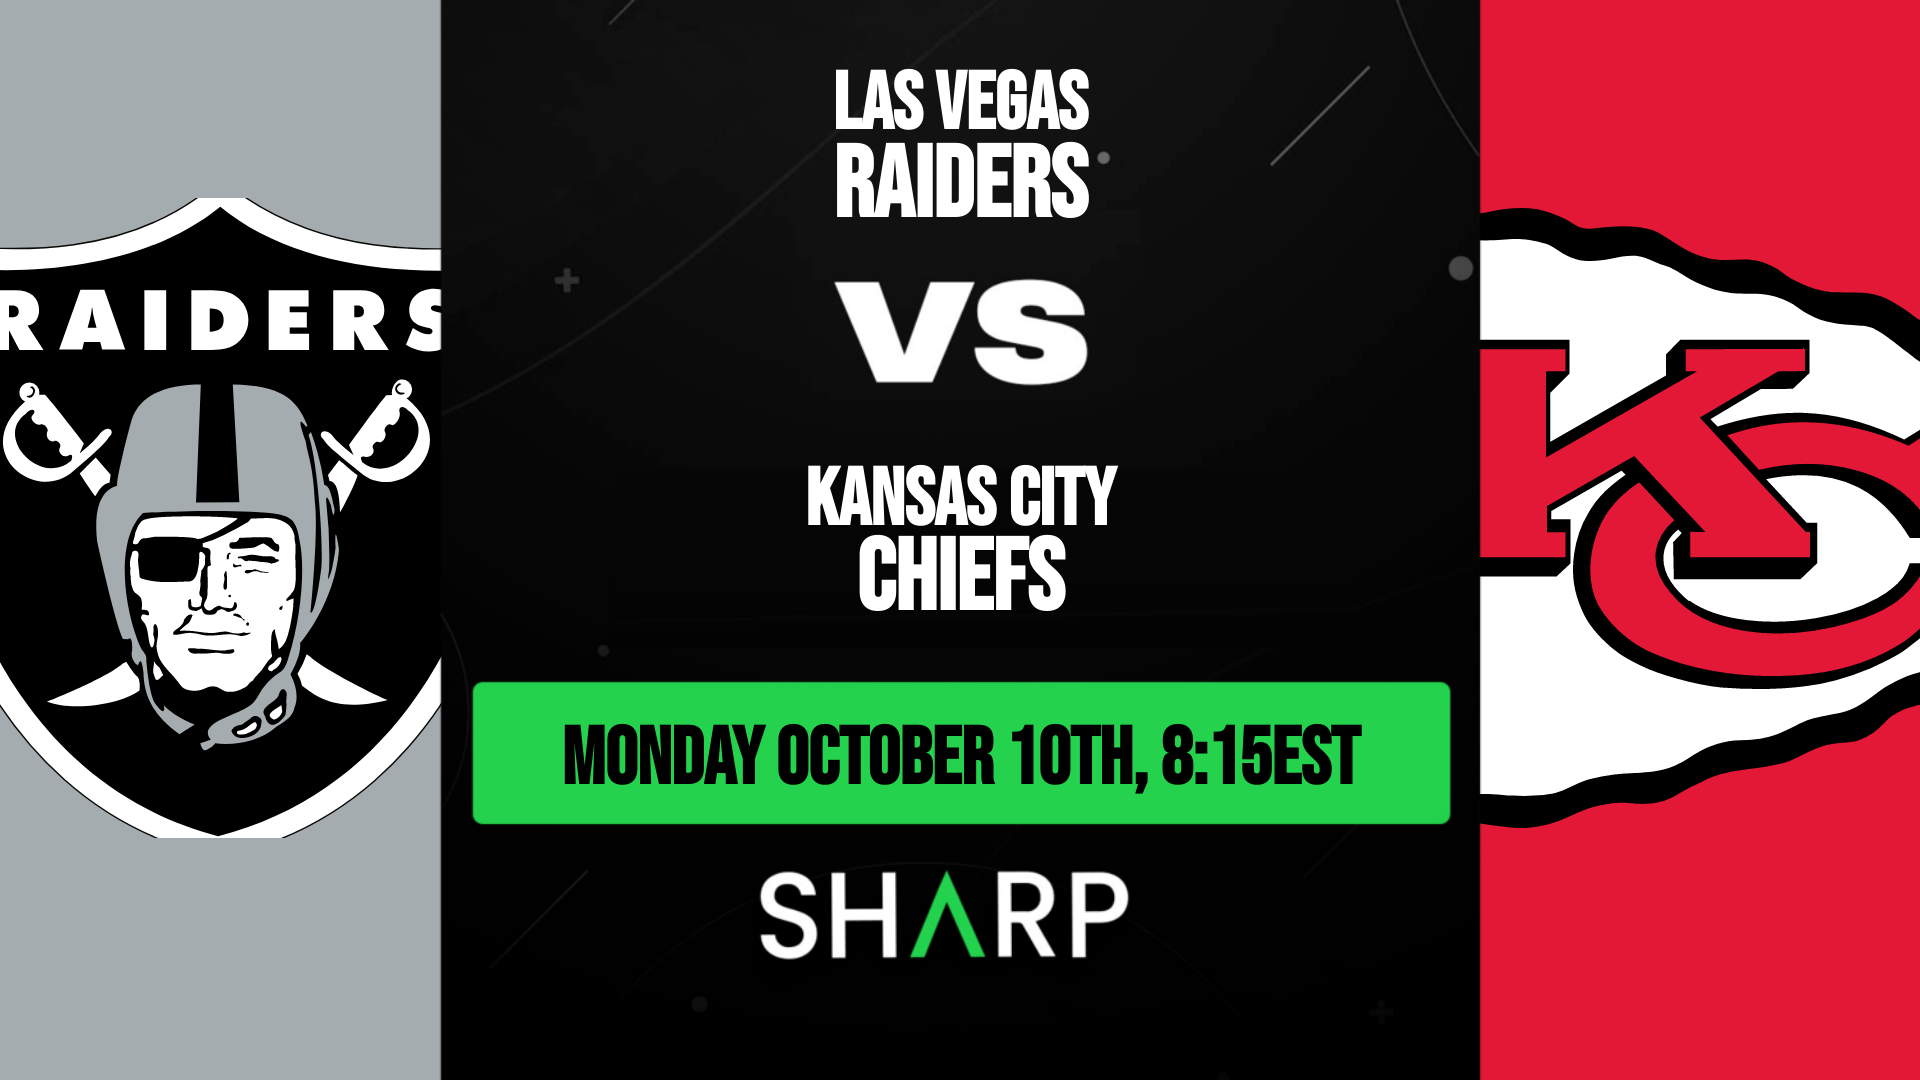 Las Vegas Raiders vs Kansas City Chiefs Matchup Preview - October